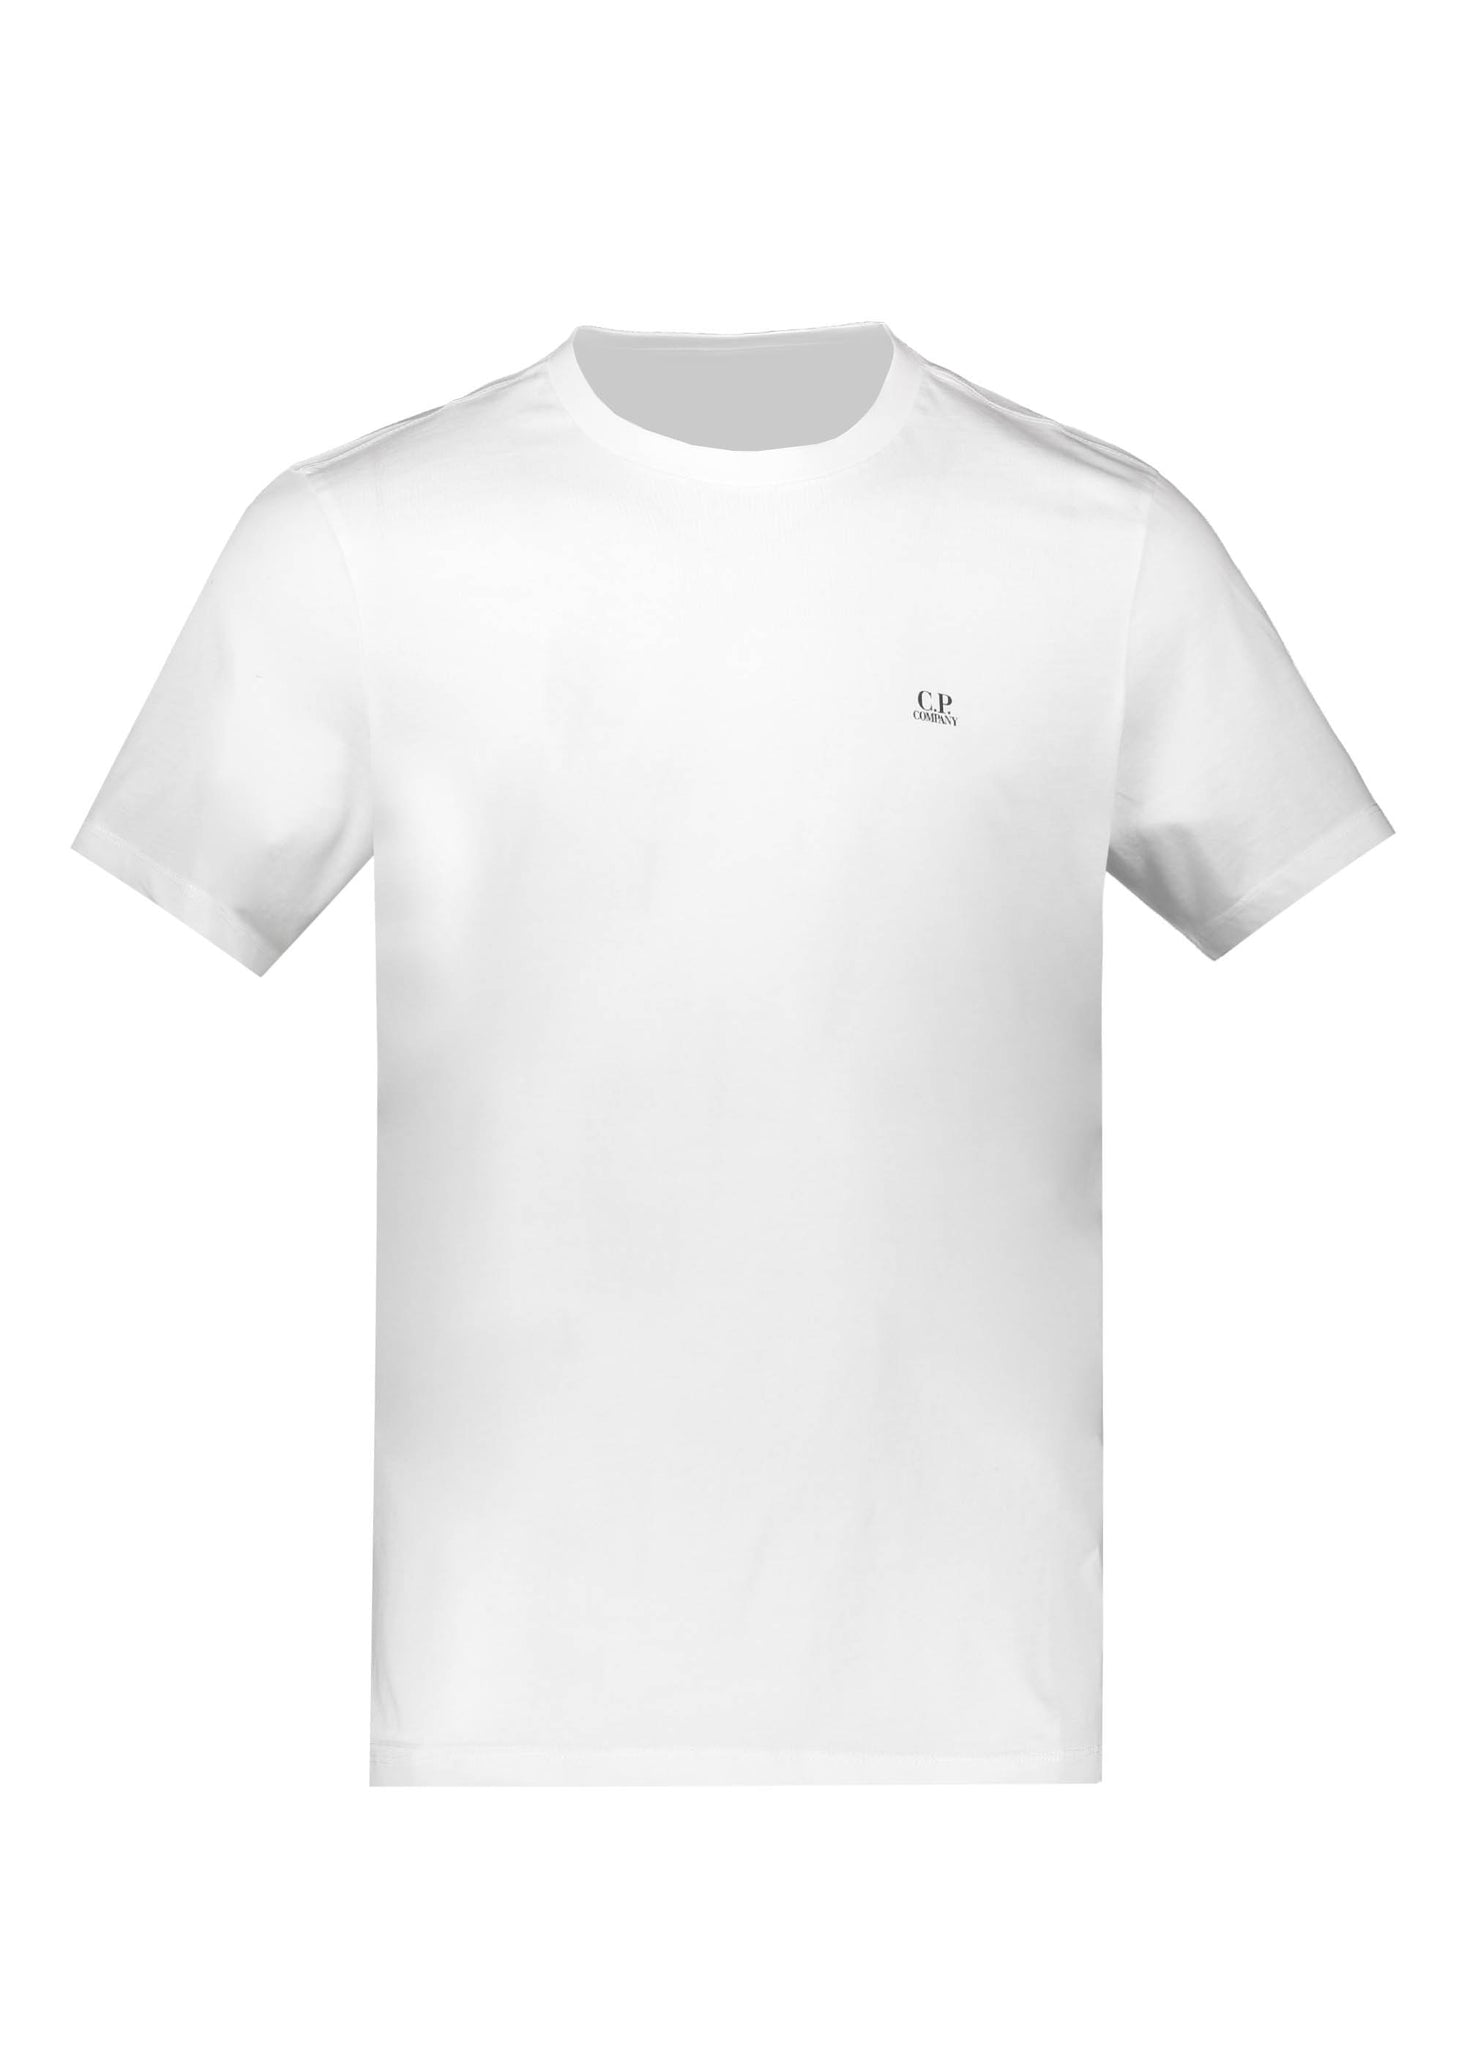 SS T-Shirt - Gauze White